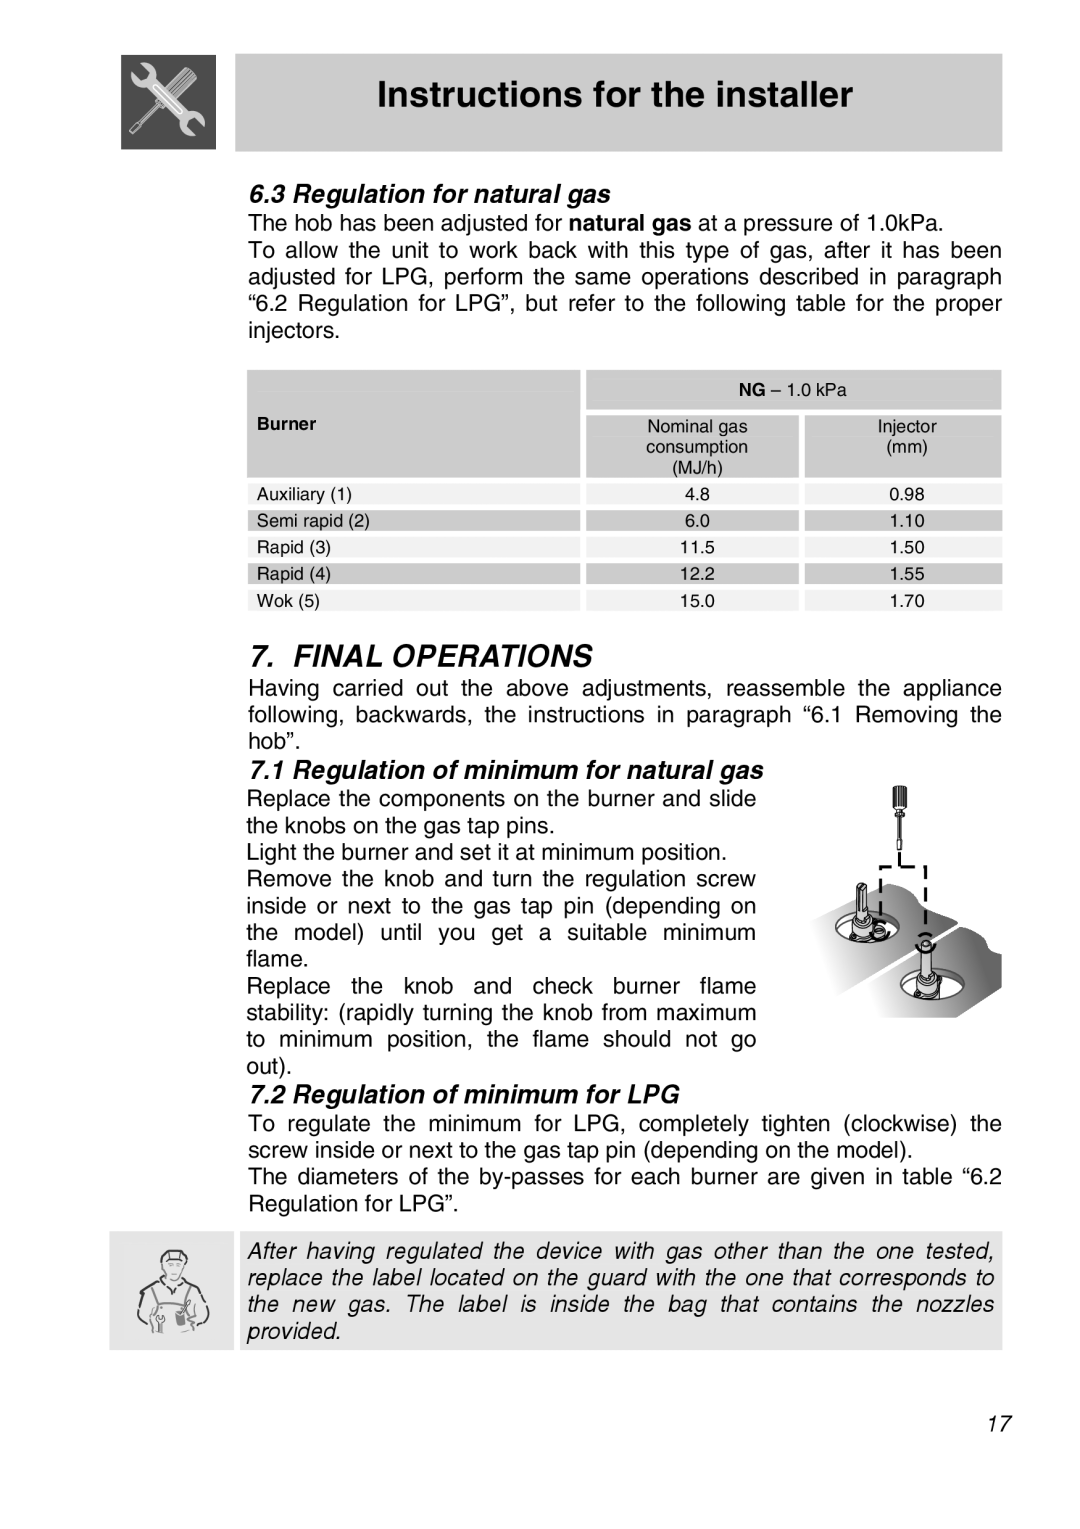 Smeg CIR60XS Final Operations, Instructions for the installer, Regulation for natural gas, Regulation of minimum for LPG 